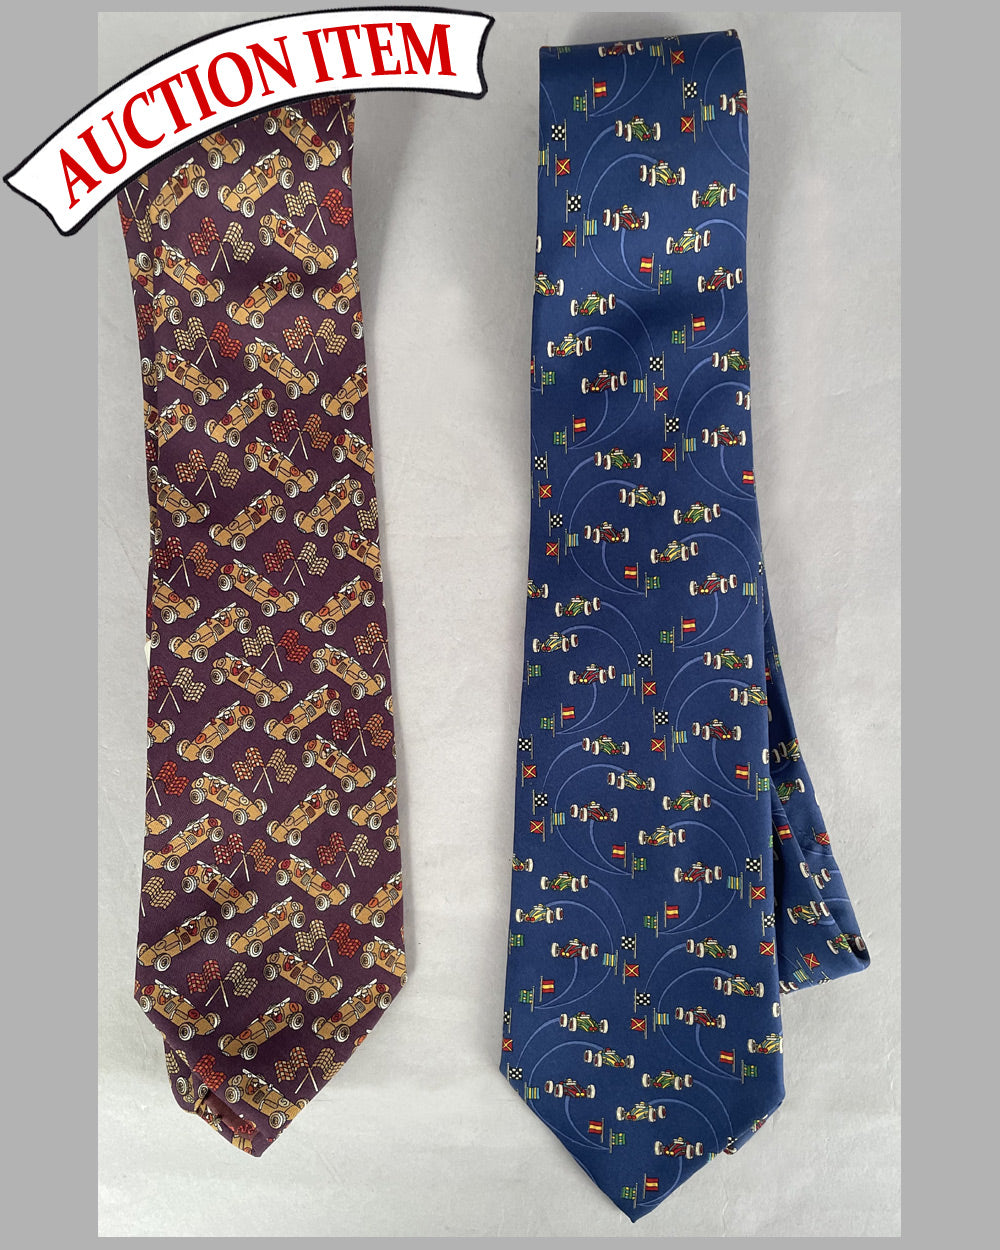 Two Salvatore Ferragamo vintage neck ties